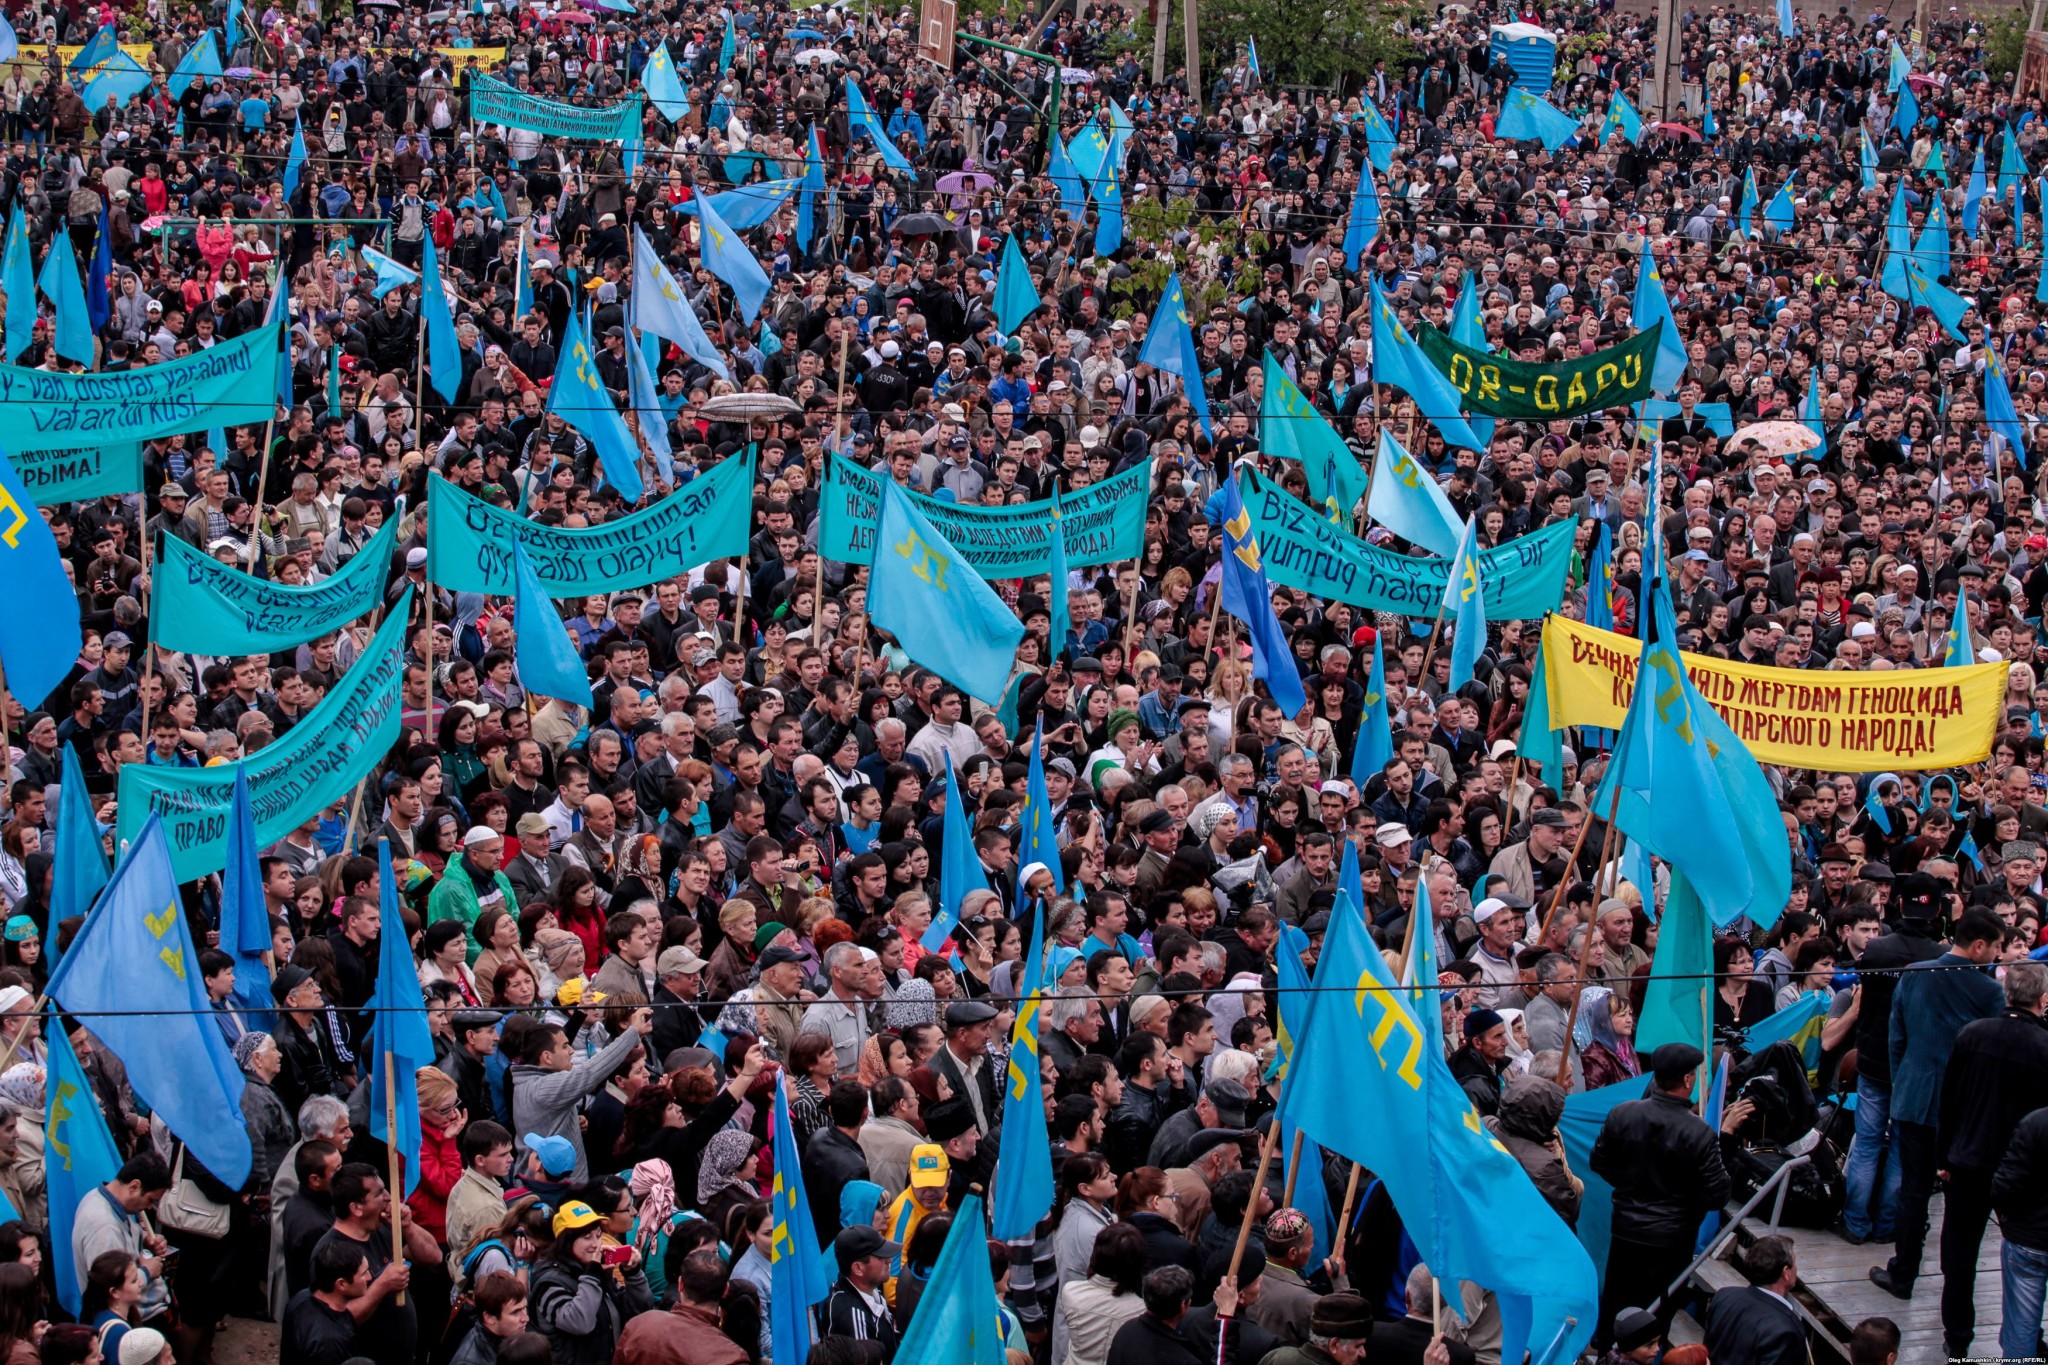 Crimean Tatars commemorating the anniversary of deportation (Image: RFE/RL)